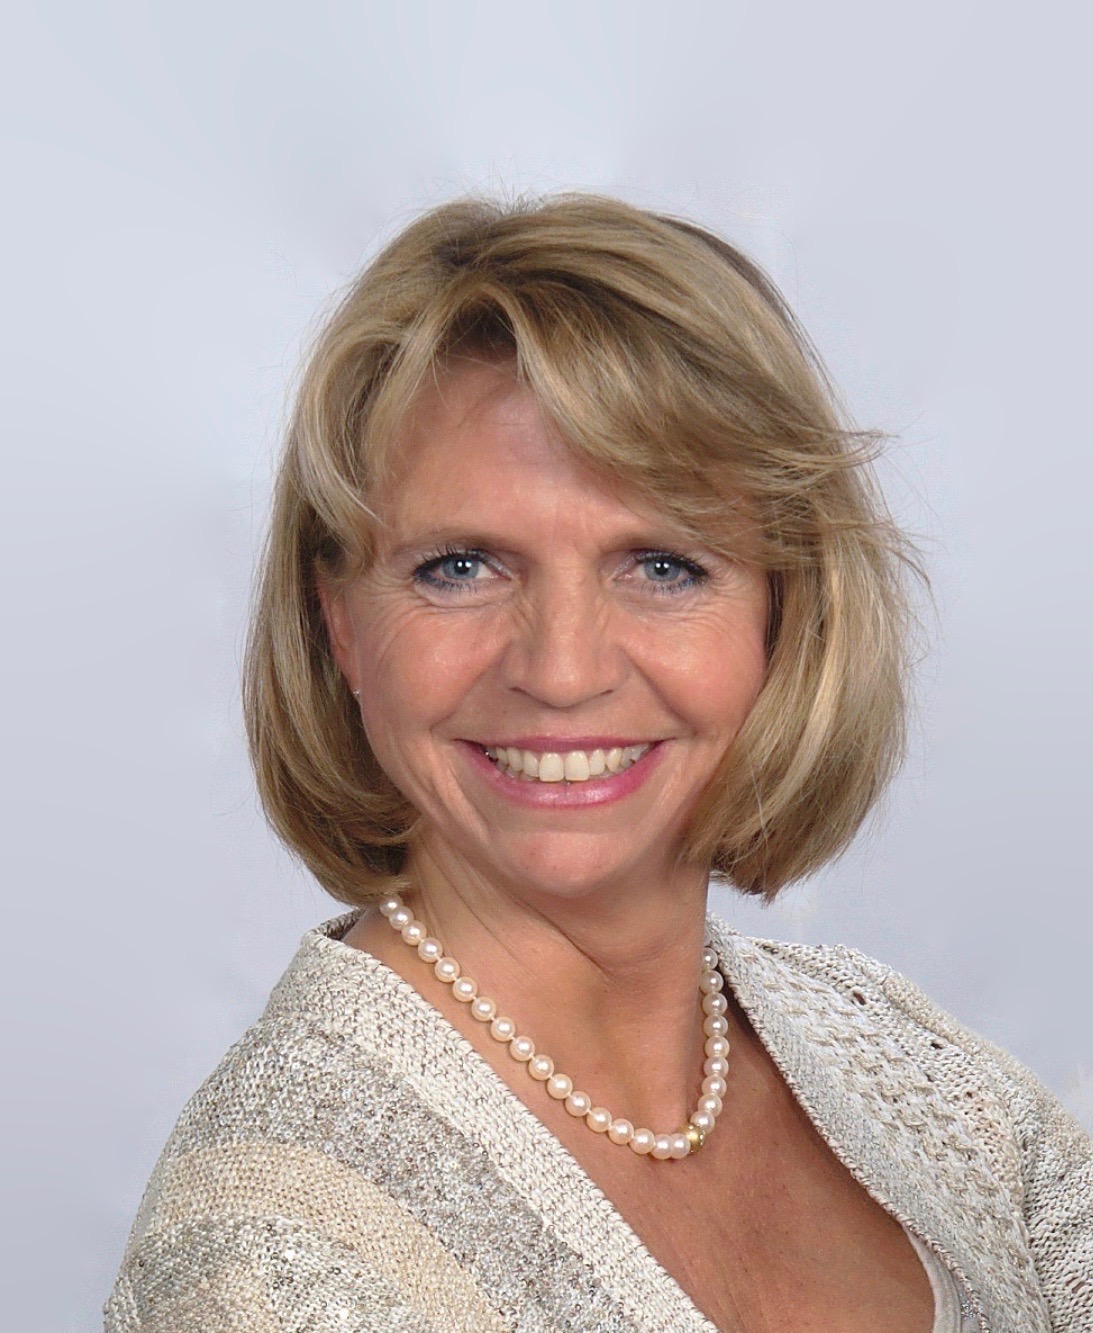 Karin Neumann